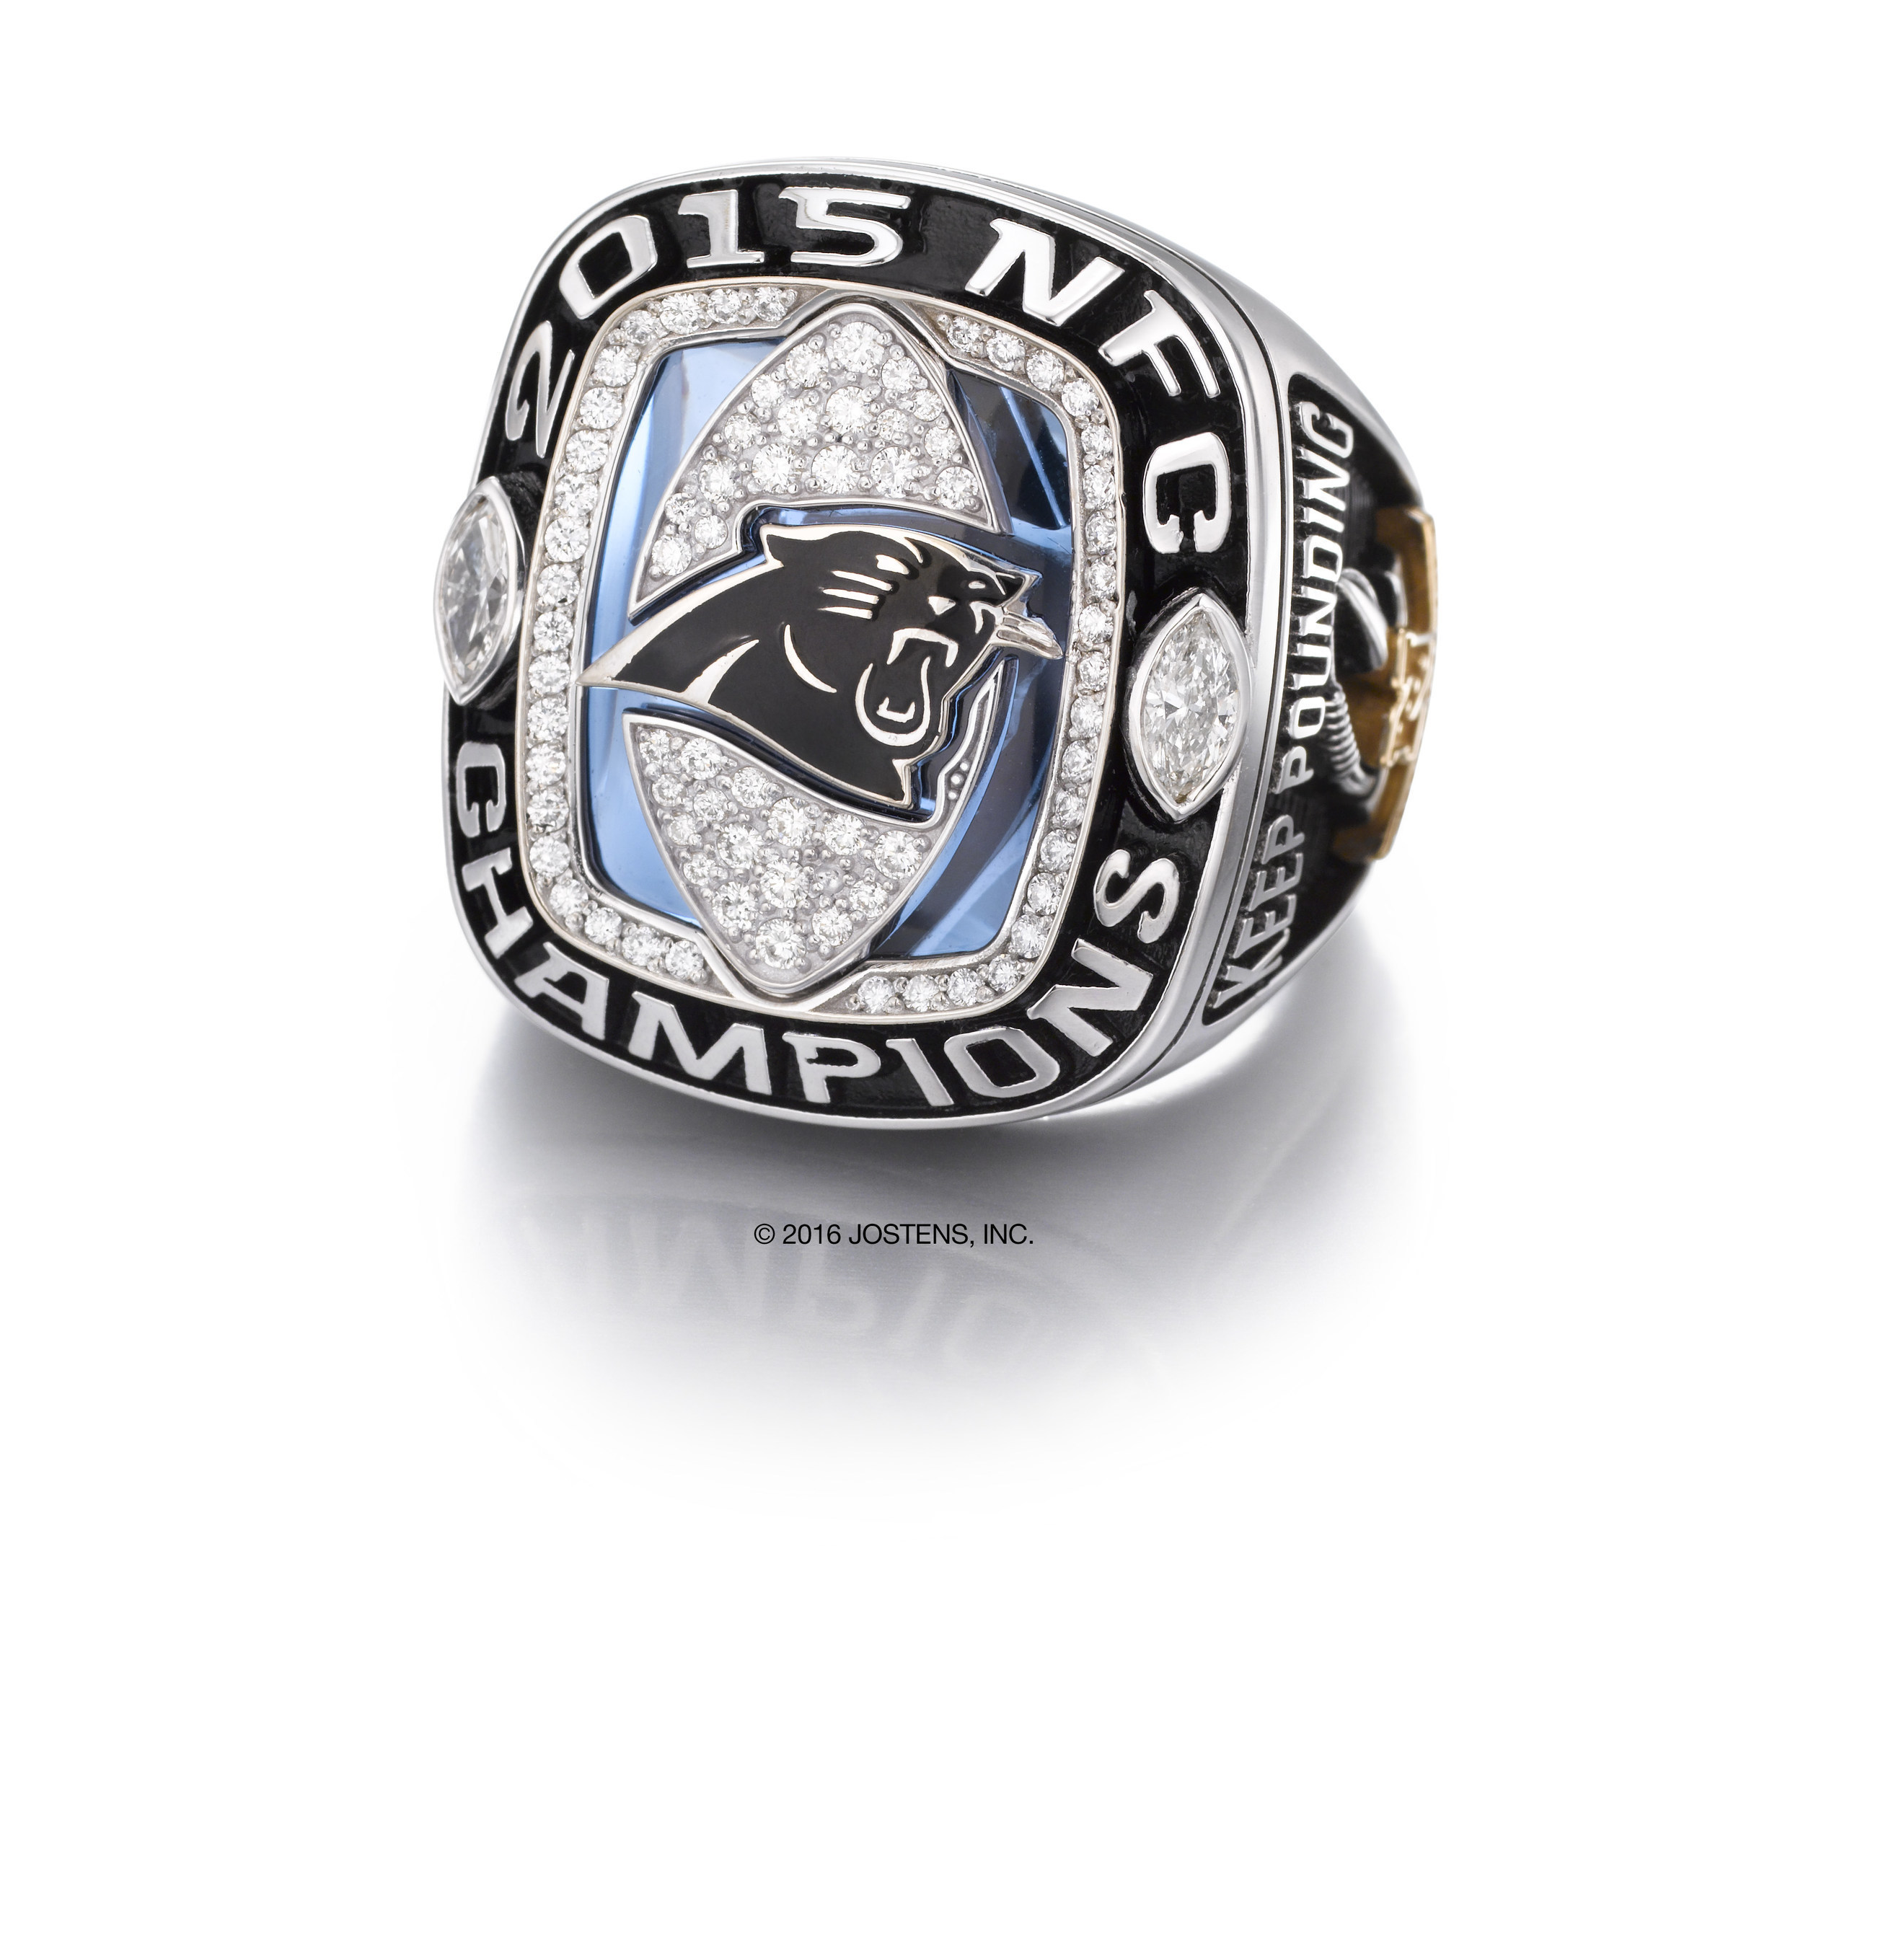 Carolina Panthers 2015 National Football Conference (NFC) Championship ring